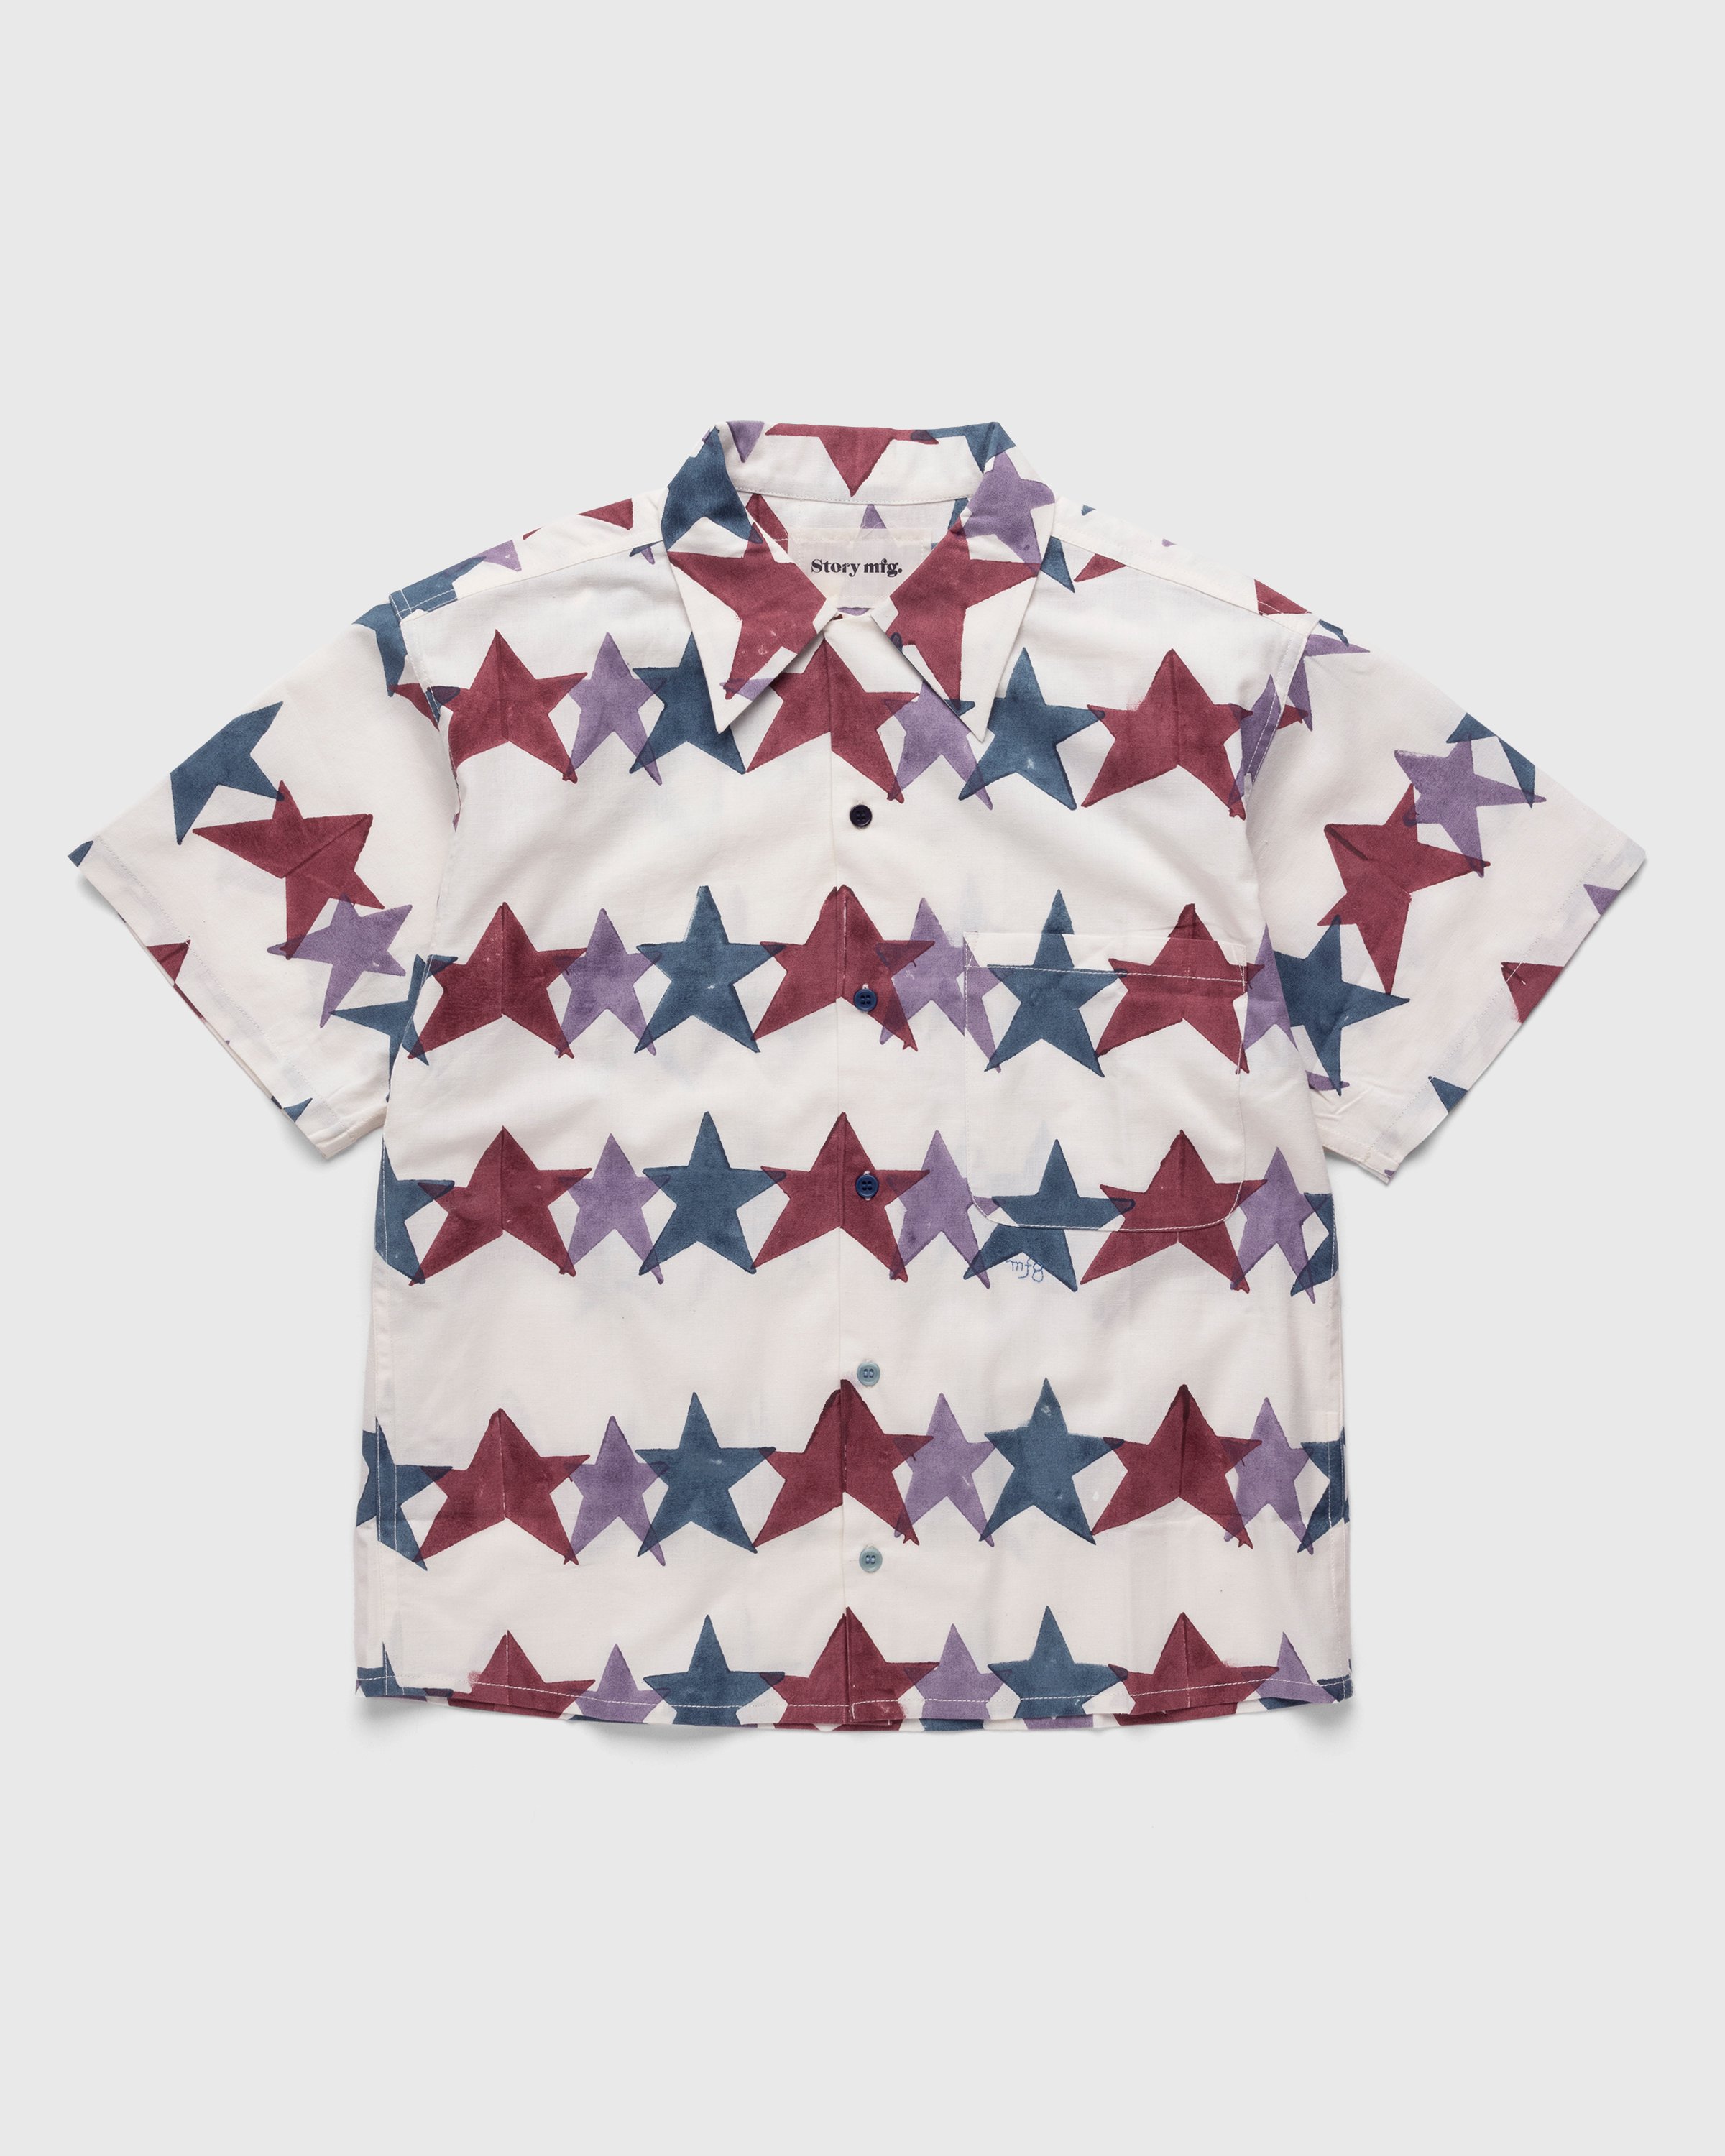 Story mfg. - Shore Shirt Star Block Print Multi - Clothing - Multi - Image 1